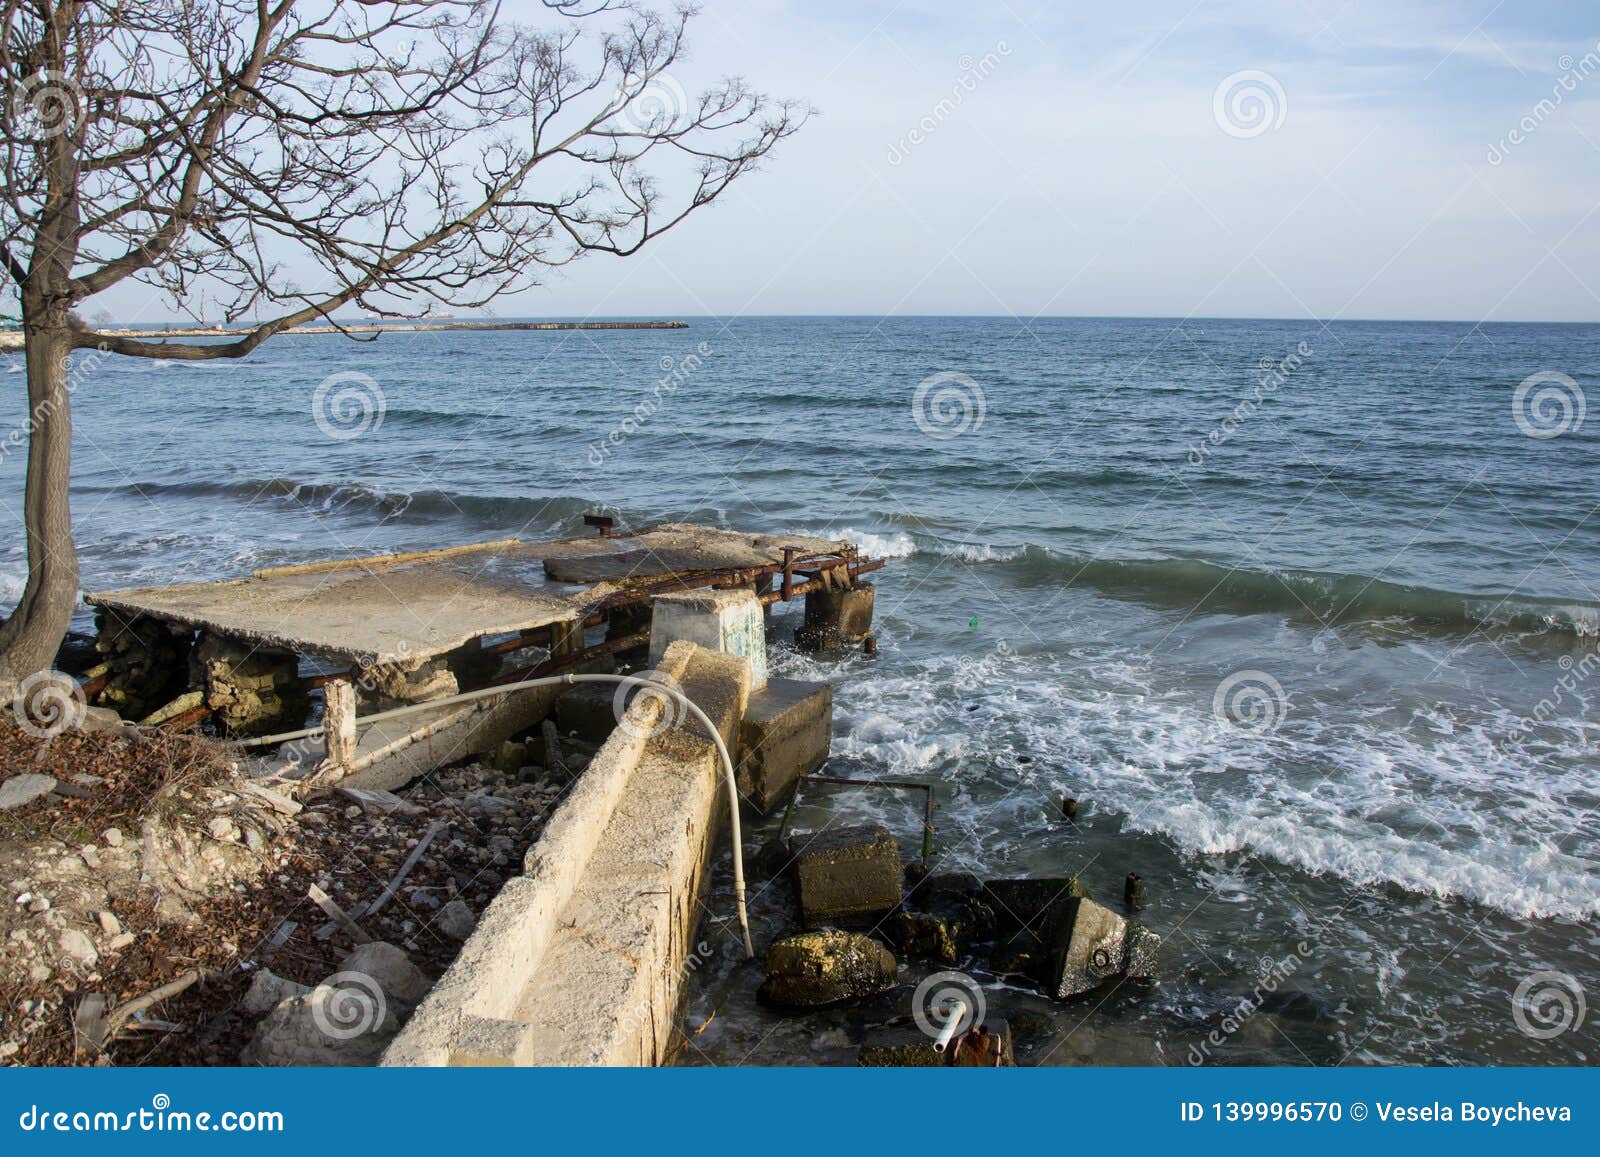 View of Broken Concrete Pier in the Sea, Coastal Destruction with ...